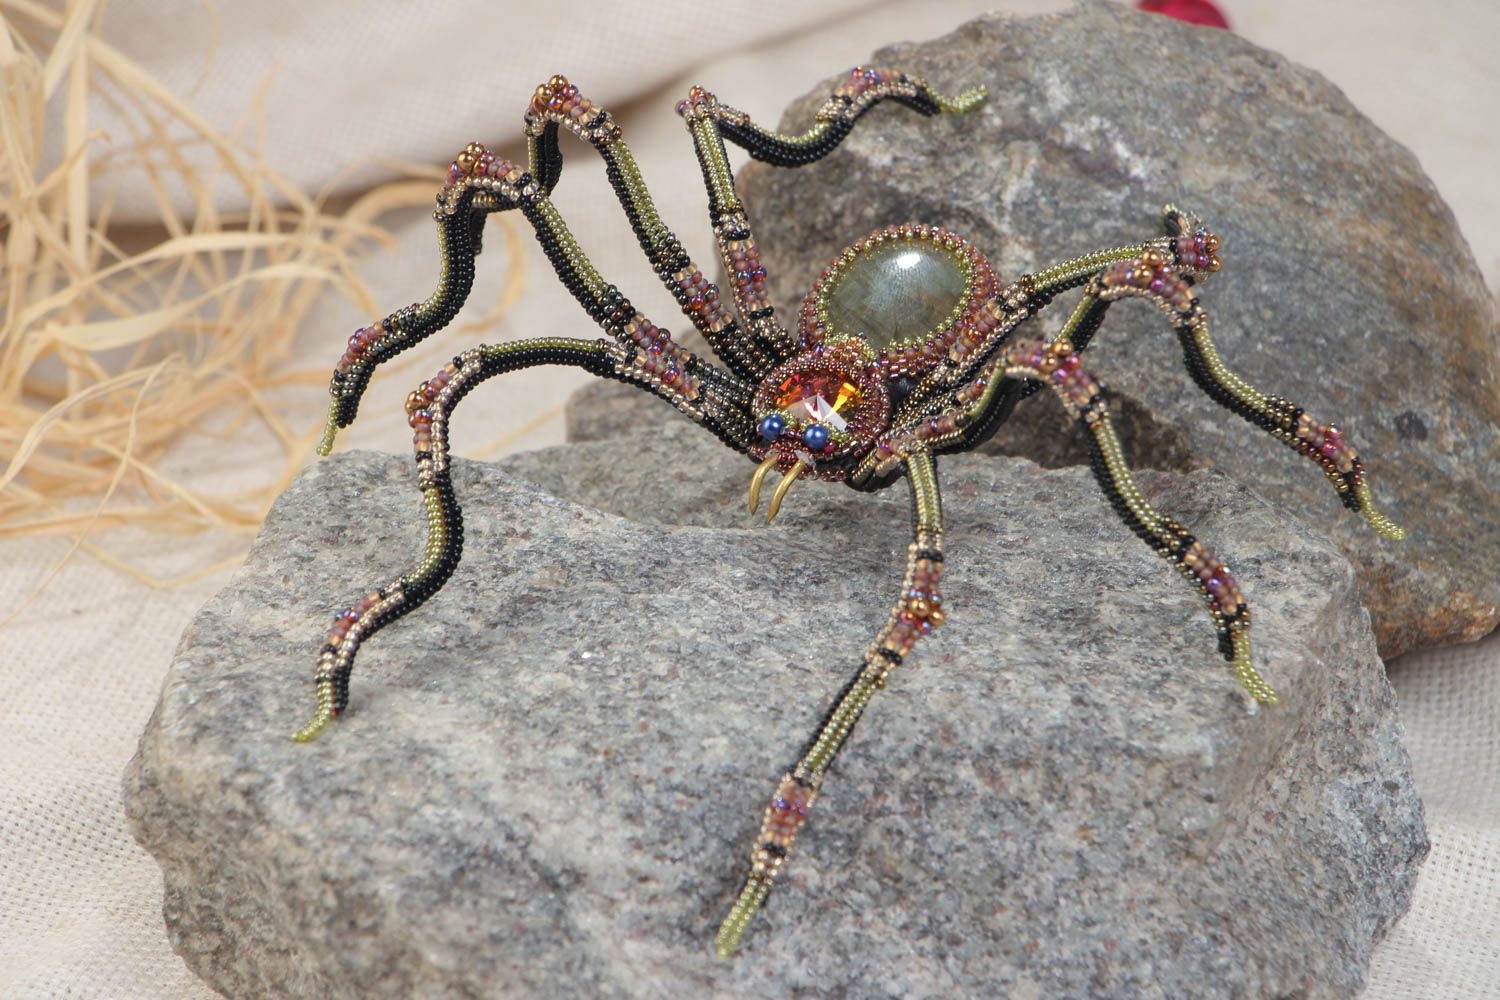 Handmade beaded spider figurine woven of beads with labradorite stone table decor photo 1